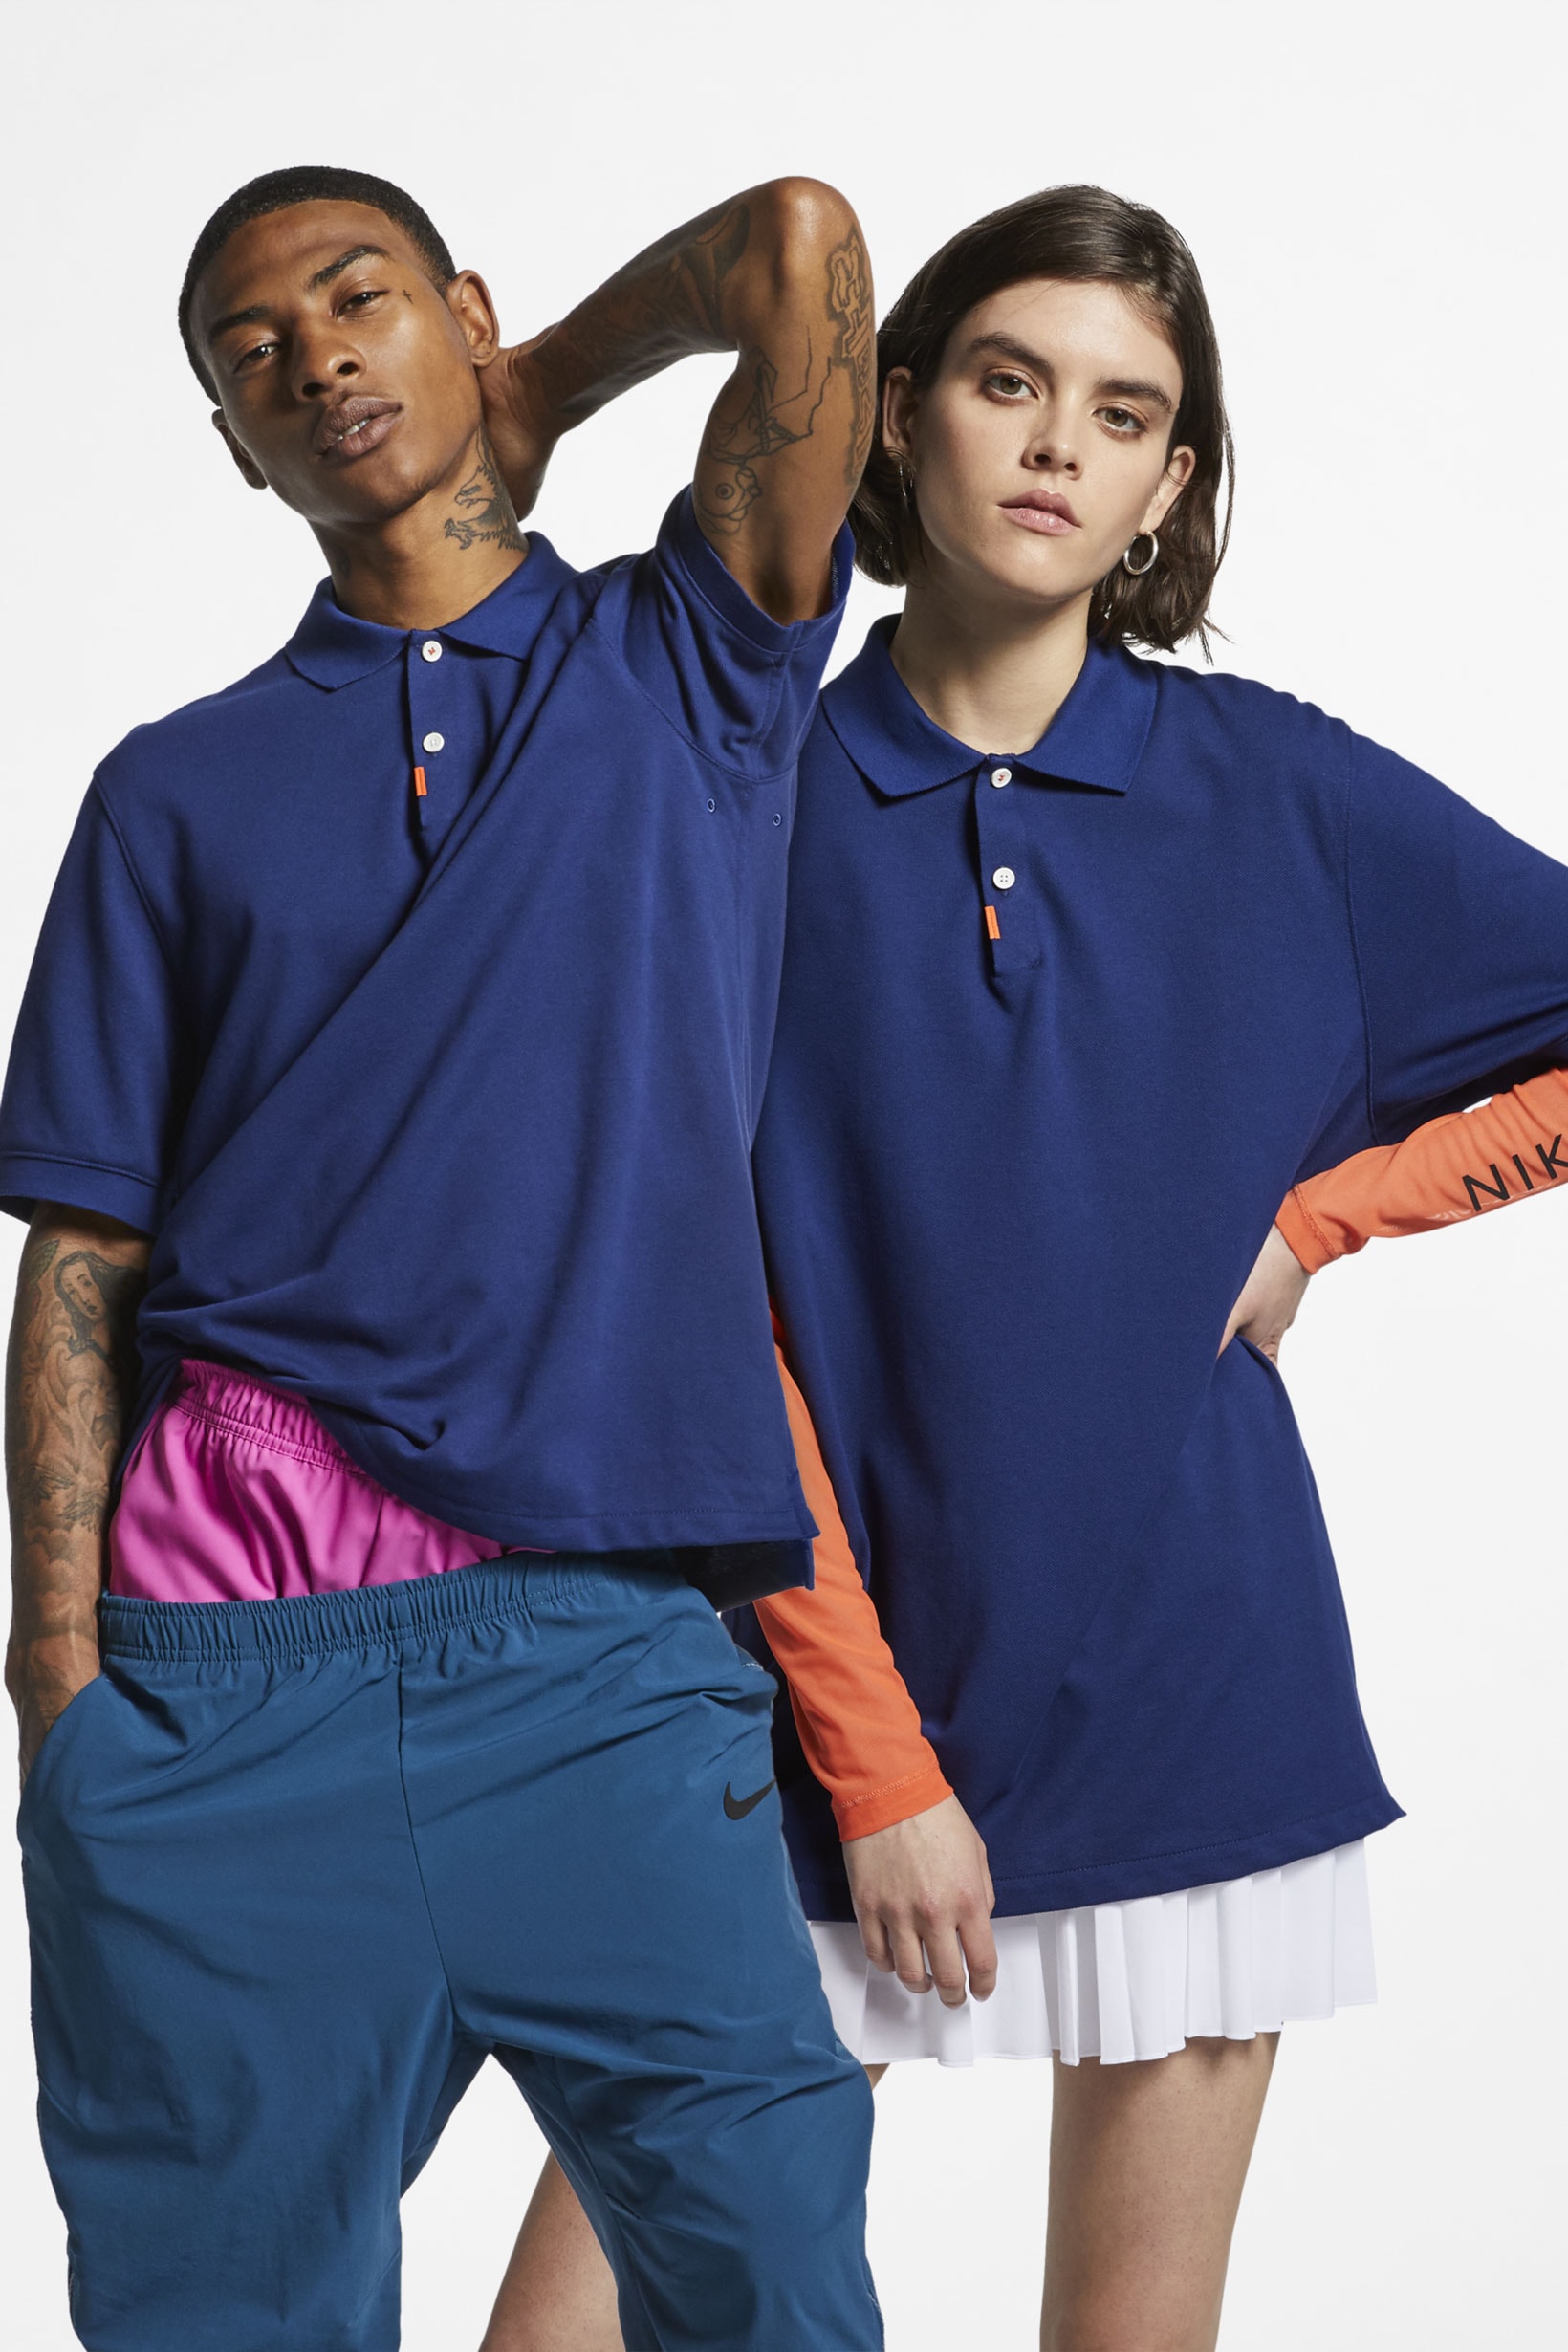 Nike Women's Polo Shirt in Pink & Blue | Hypebae